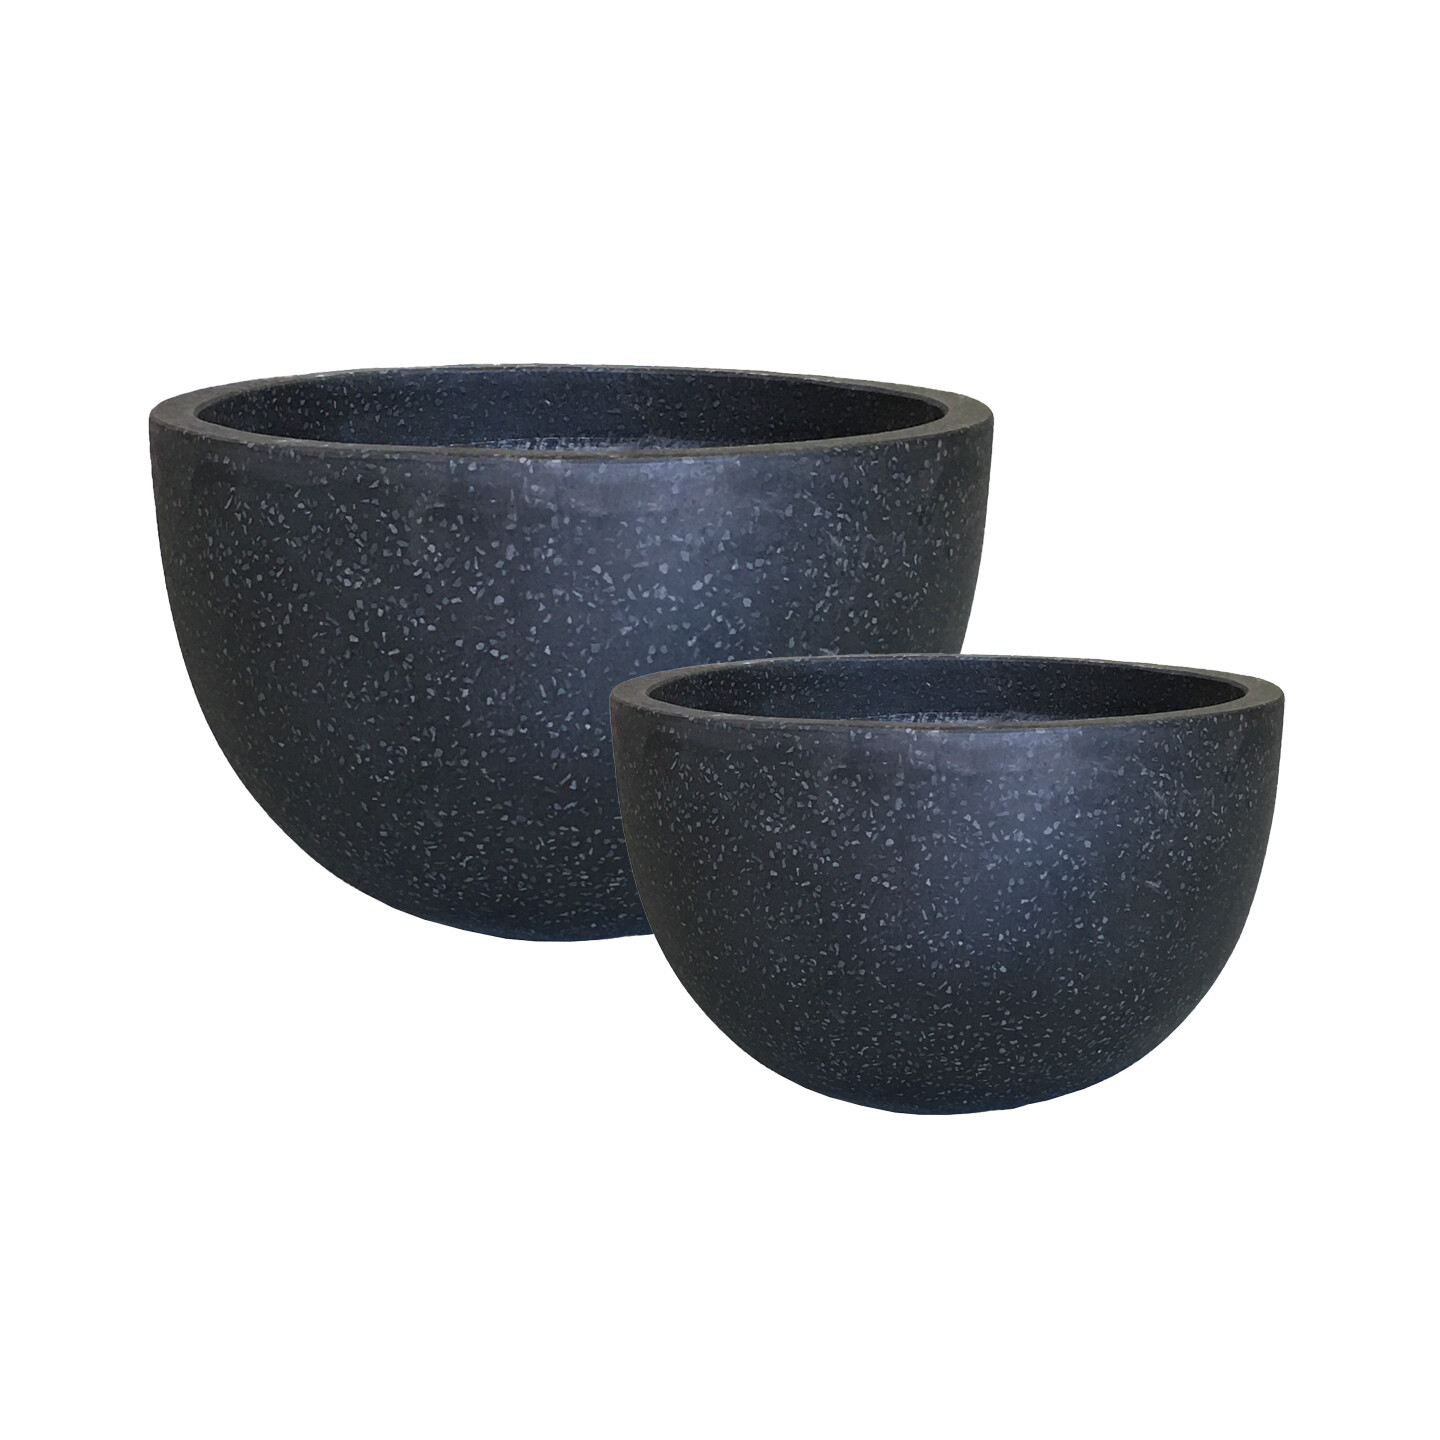 Round Bowl Shape Pot - Black Terrazzo 31cmx 21cm